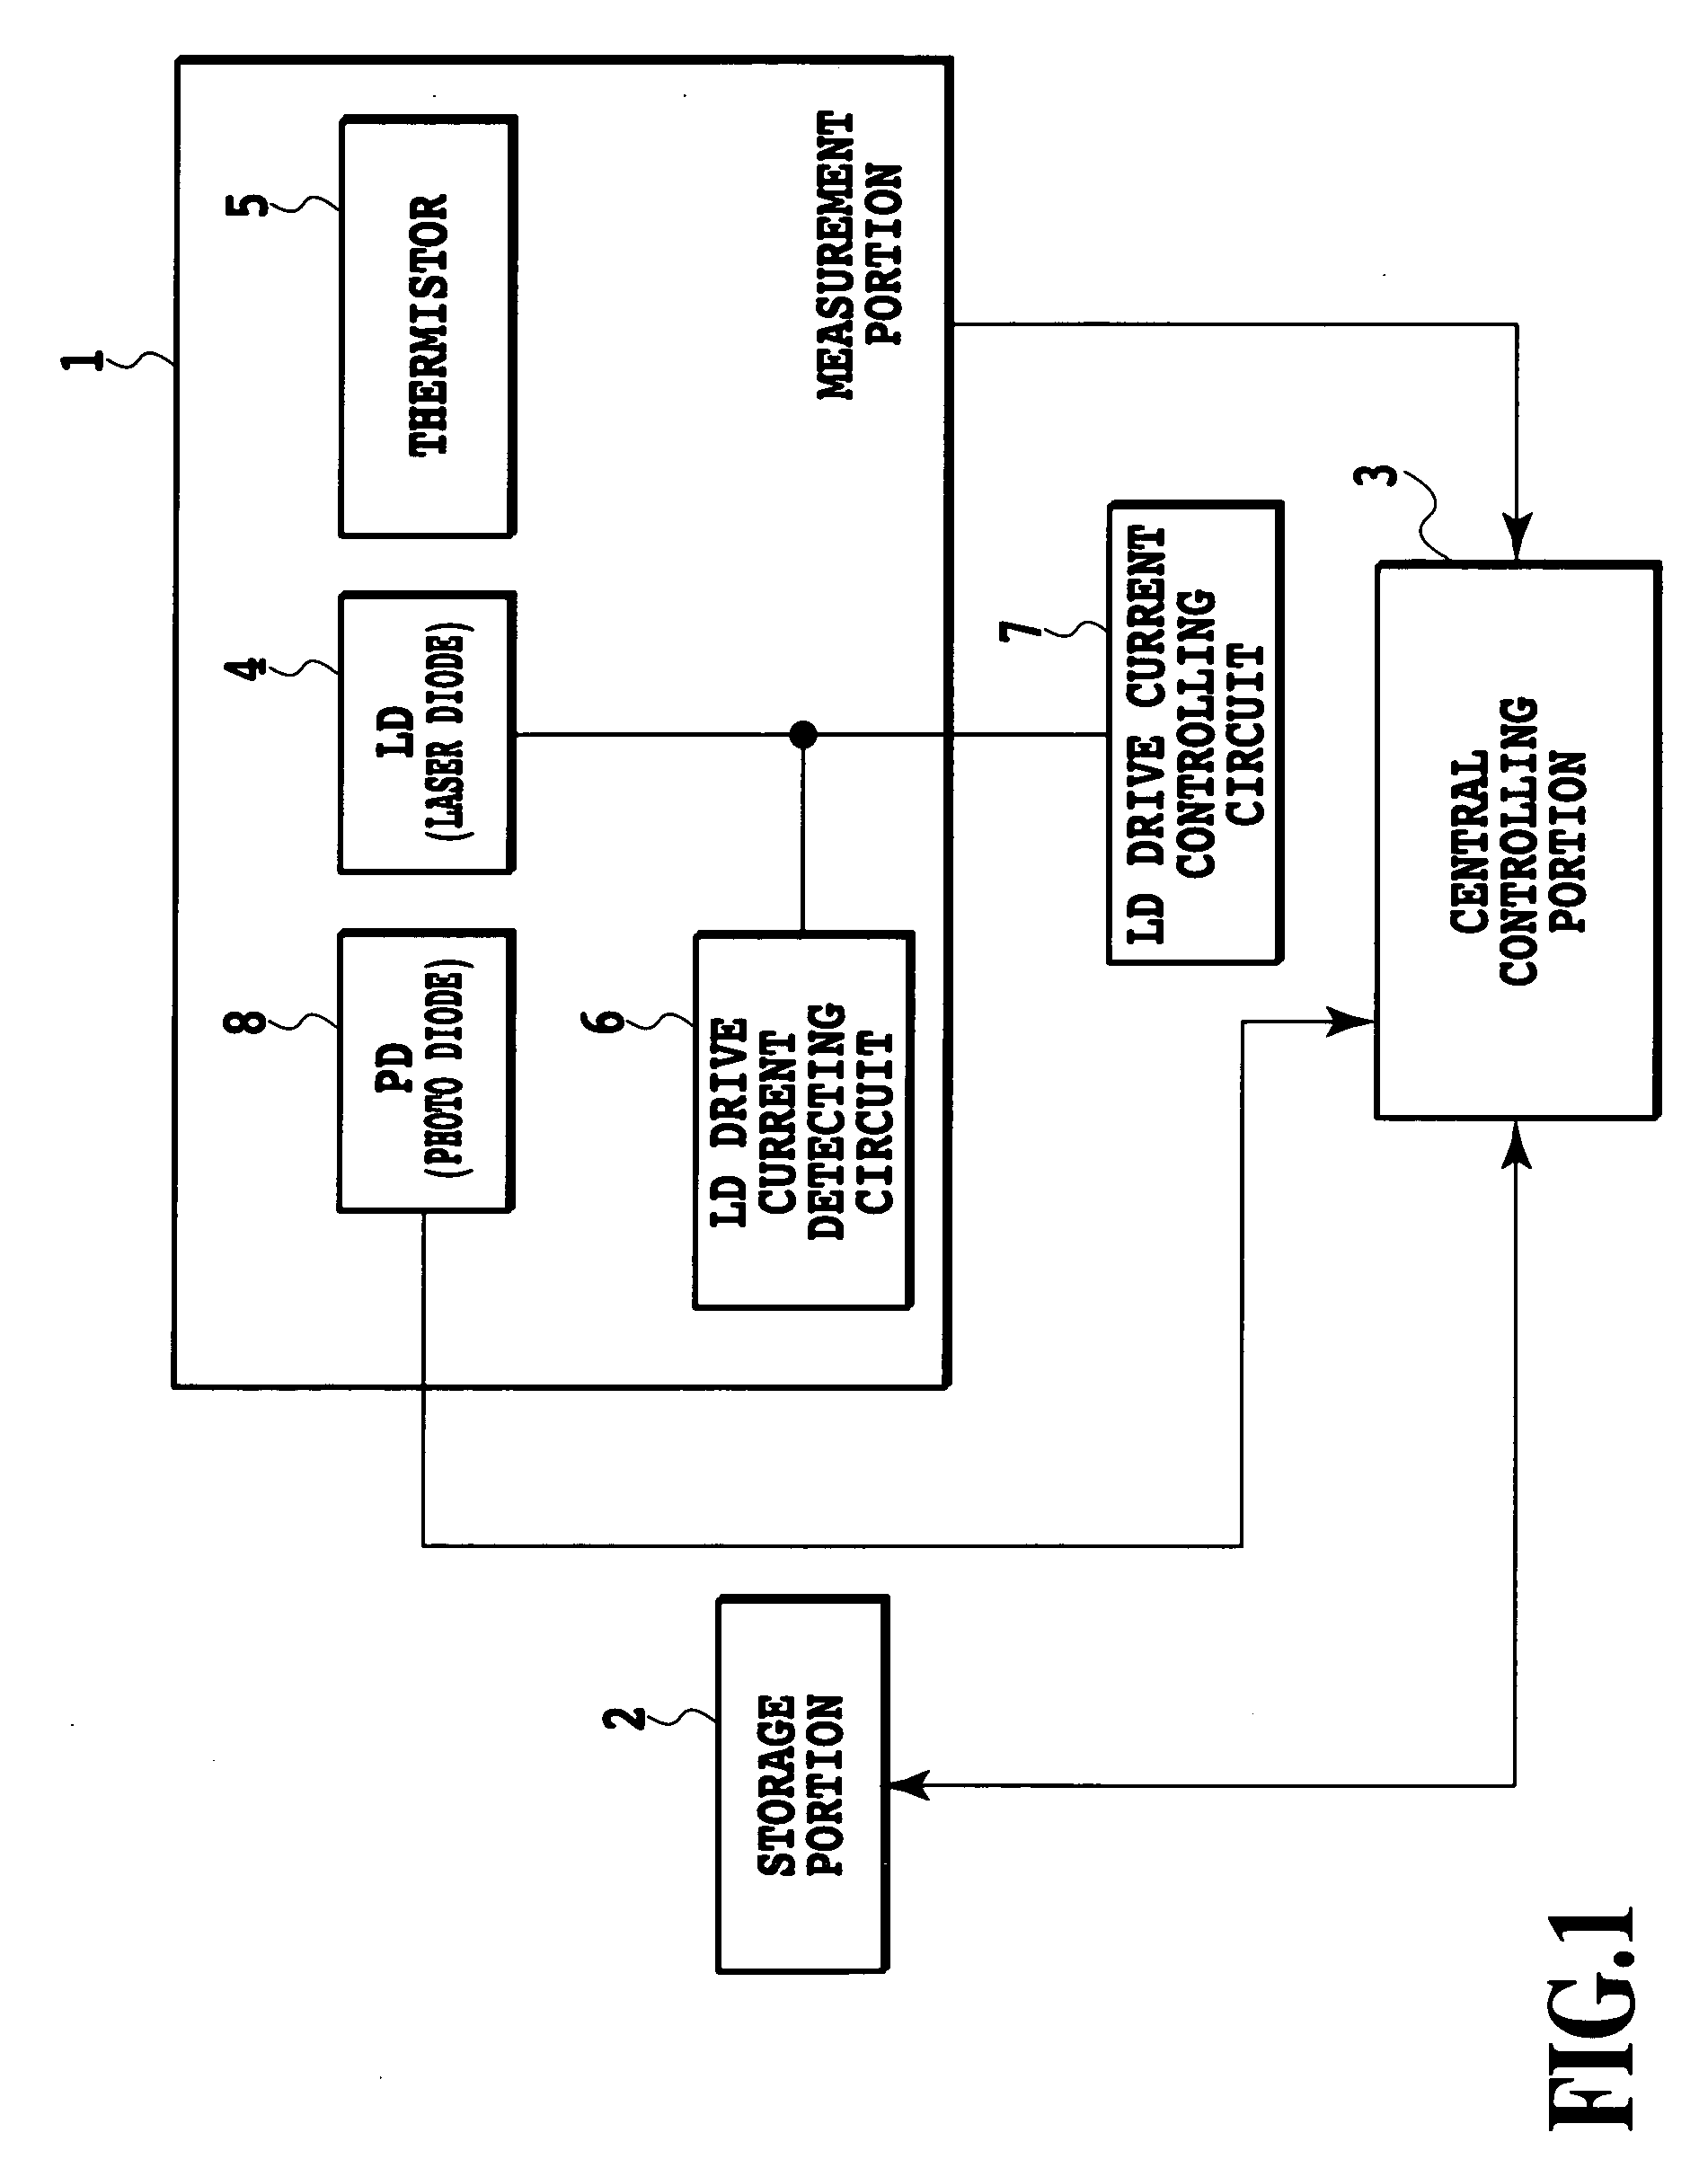 Optical module and its wavelength monitor control method